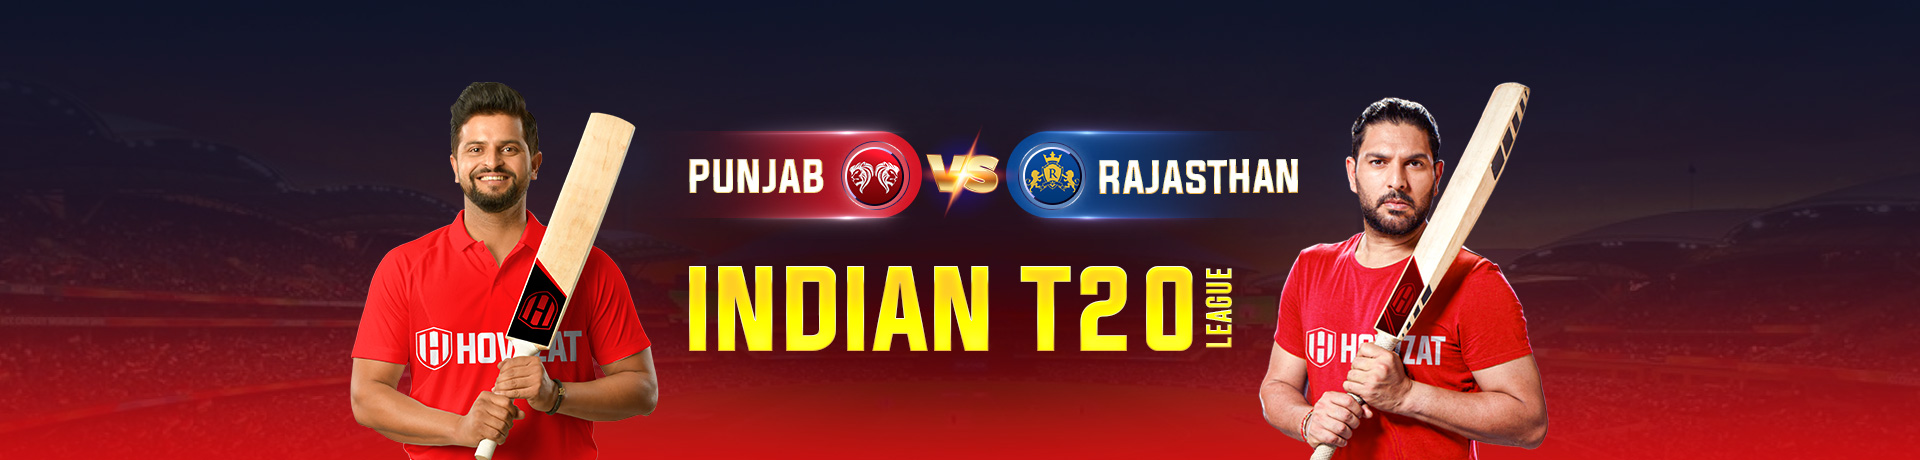 Punjab vs Rajasthan Indian T20 League